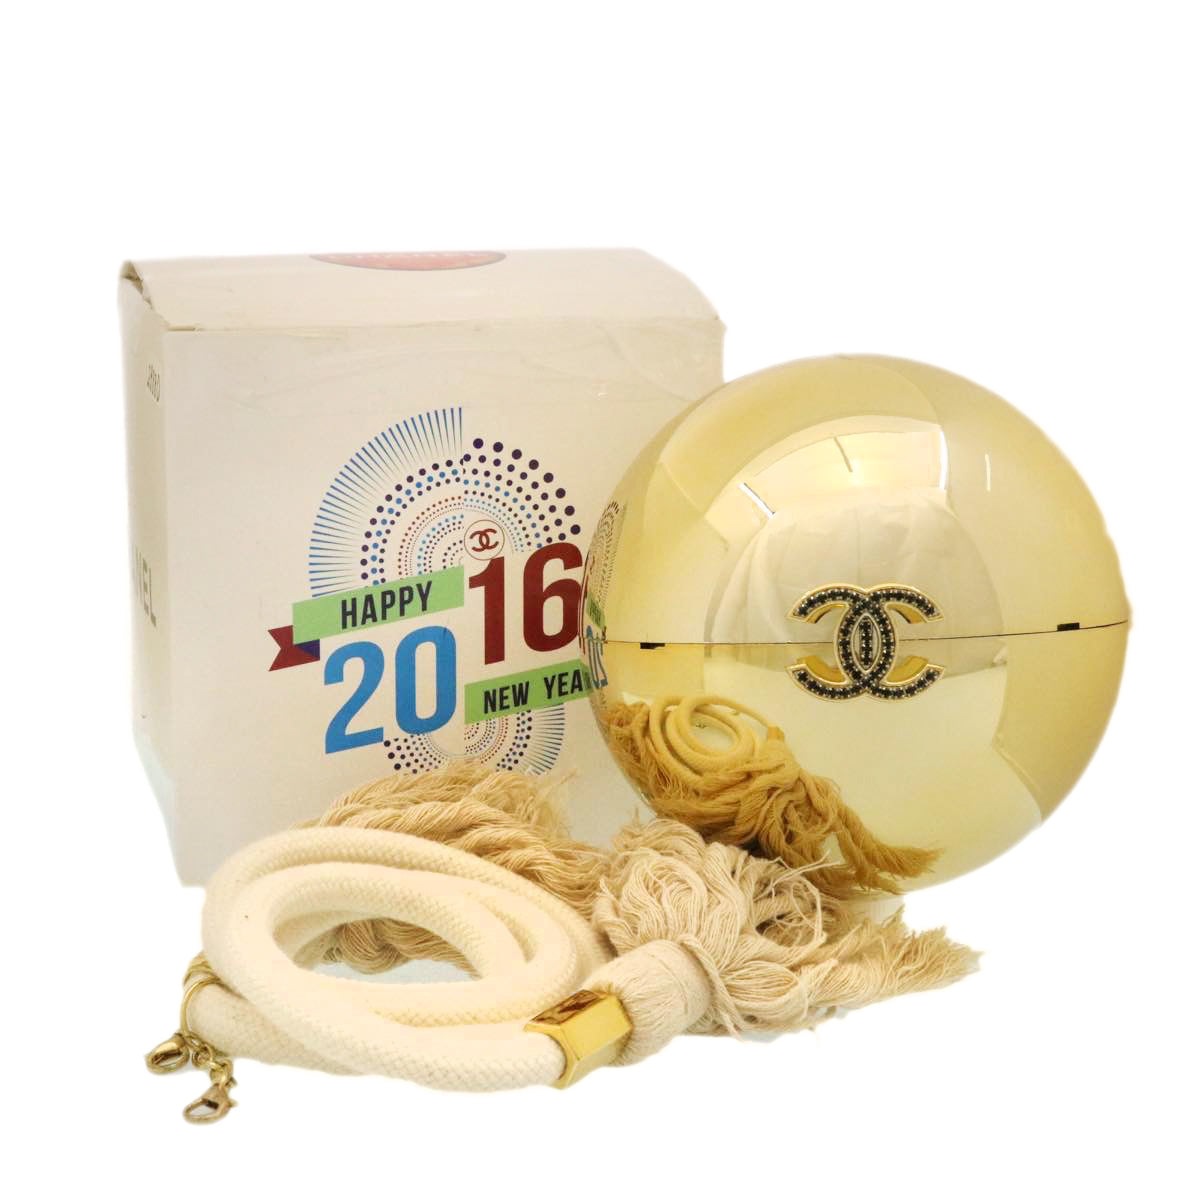 CHANEL COCO Mark Stone Shoulder Bag Dubai Limited 2016 Gold CC Auth 28880A